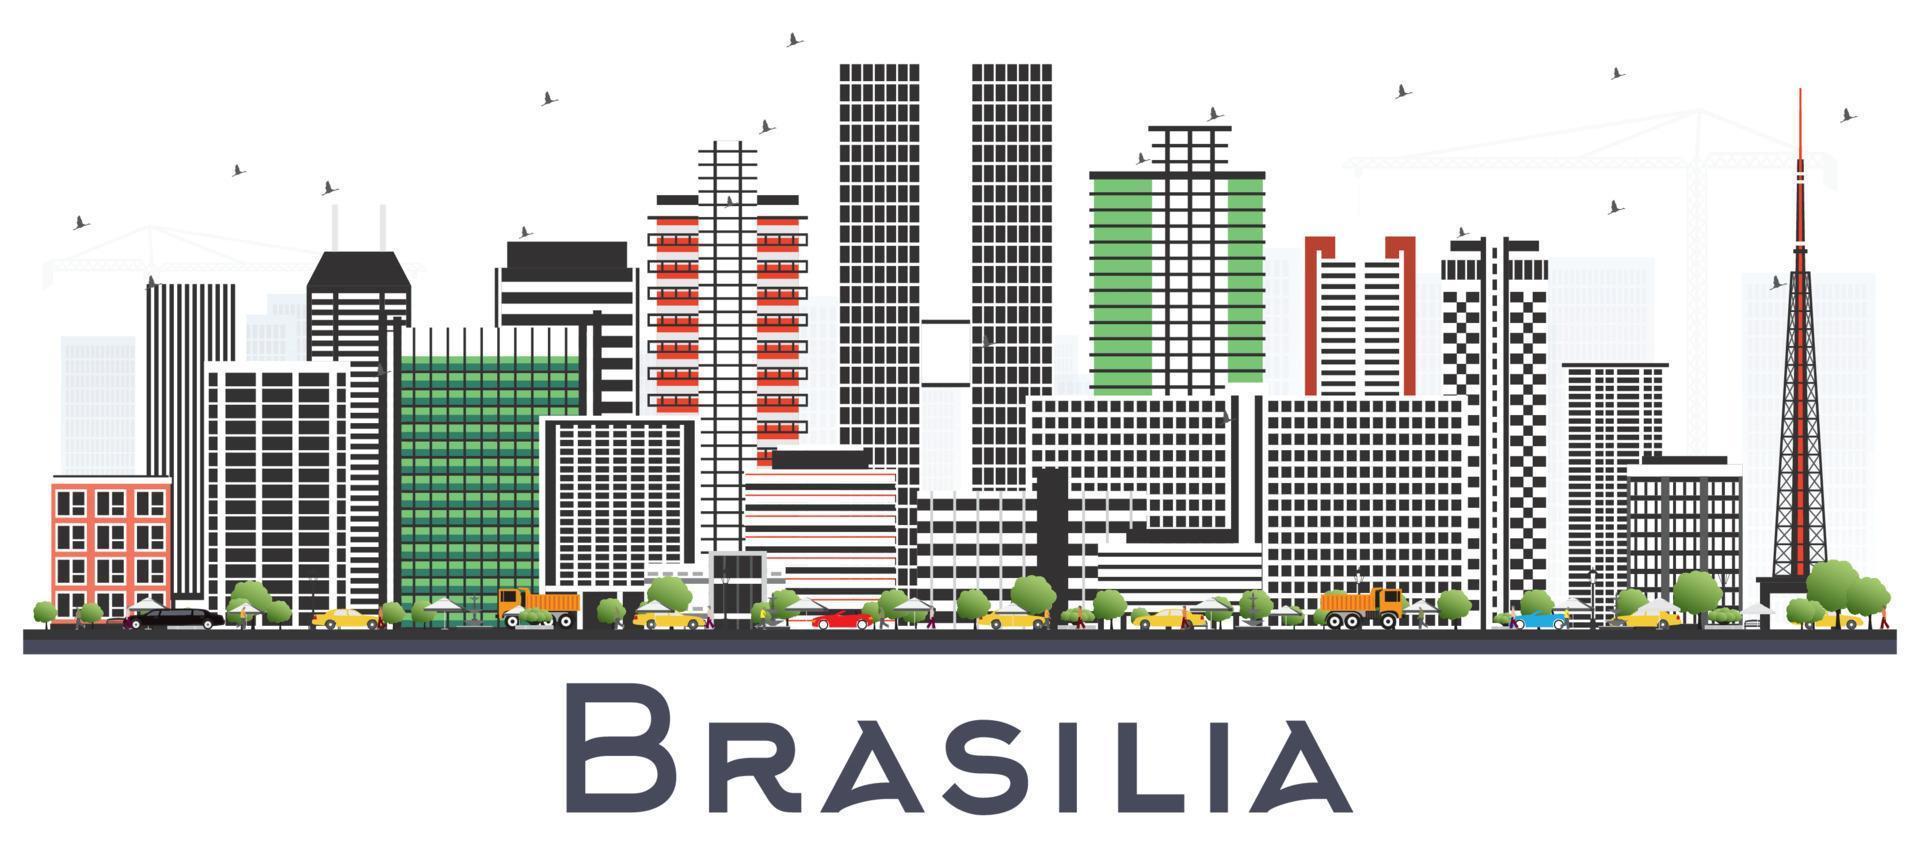 Brasilia Brazil City Skyline with Gray Buildings Isolated on White. vector